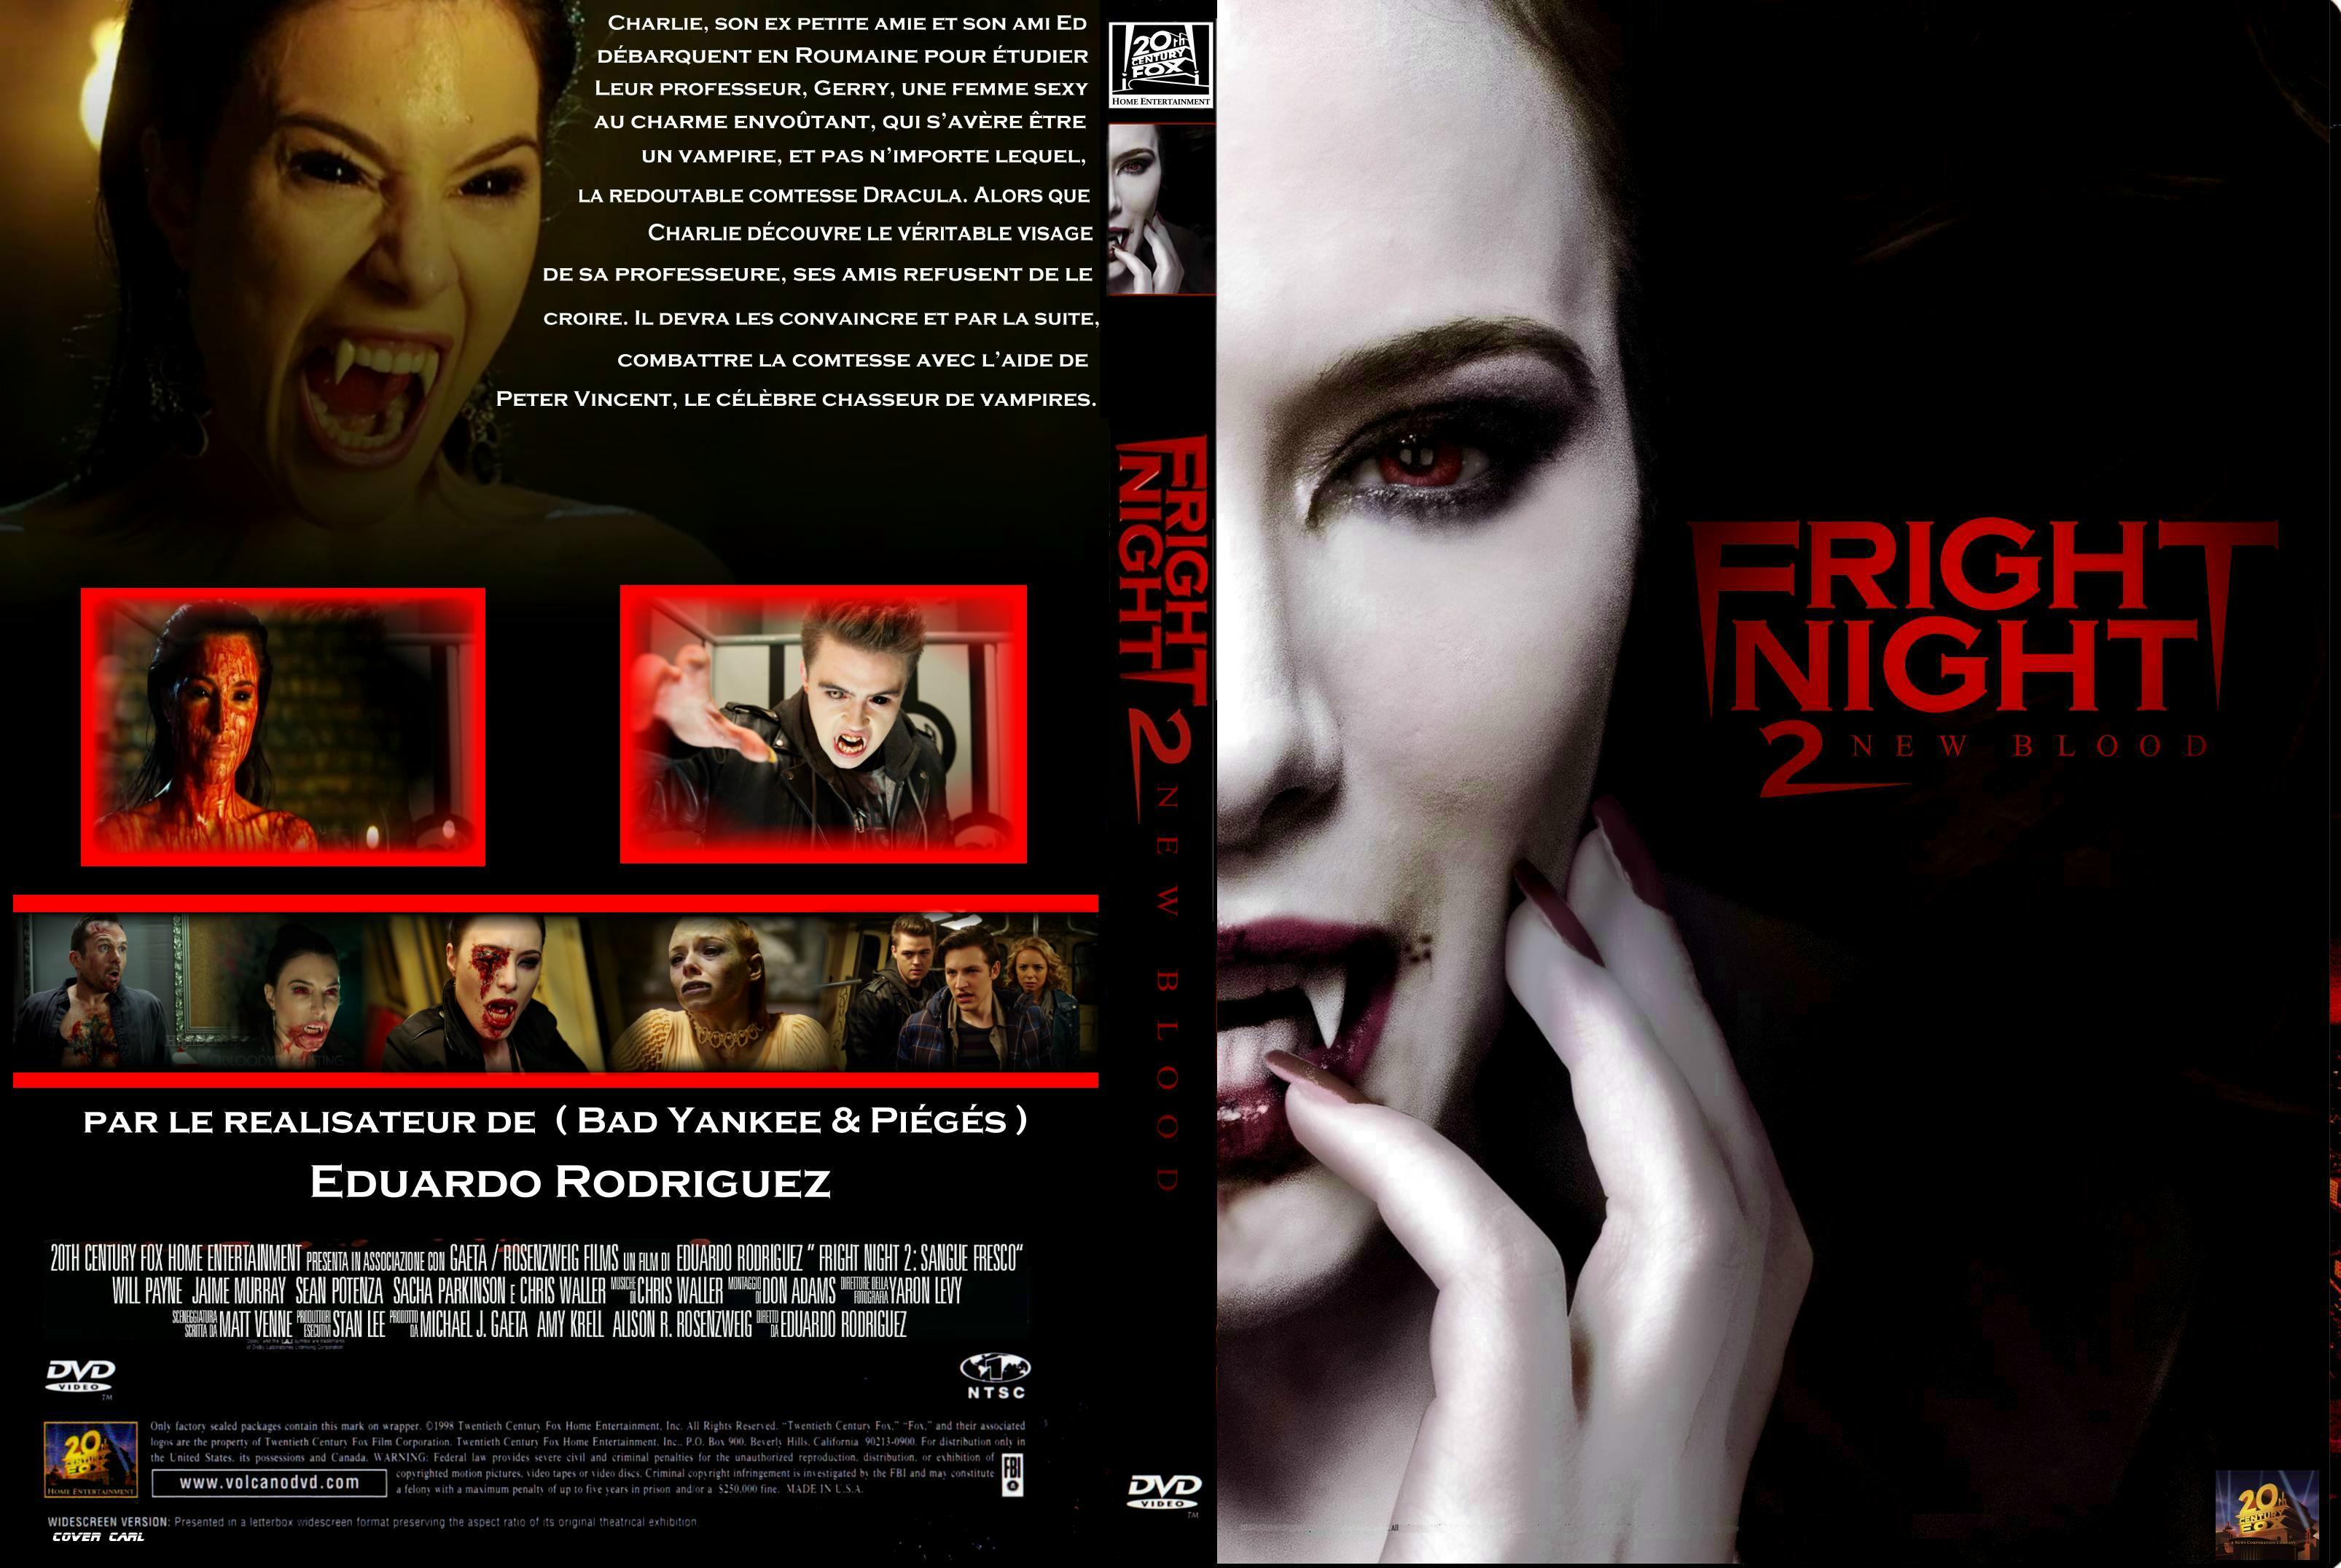 Jaquette DVD Fright Night 2 custom